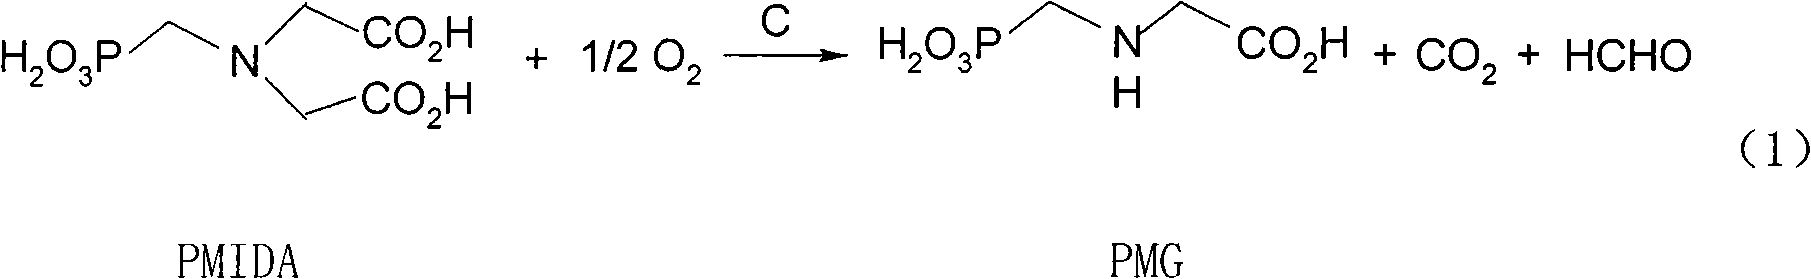 Improved production method of N-phosphonomethyl glycine